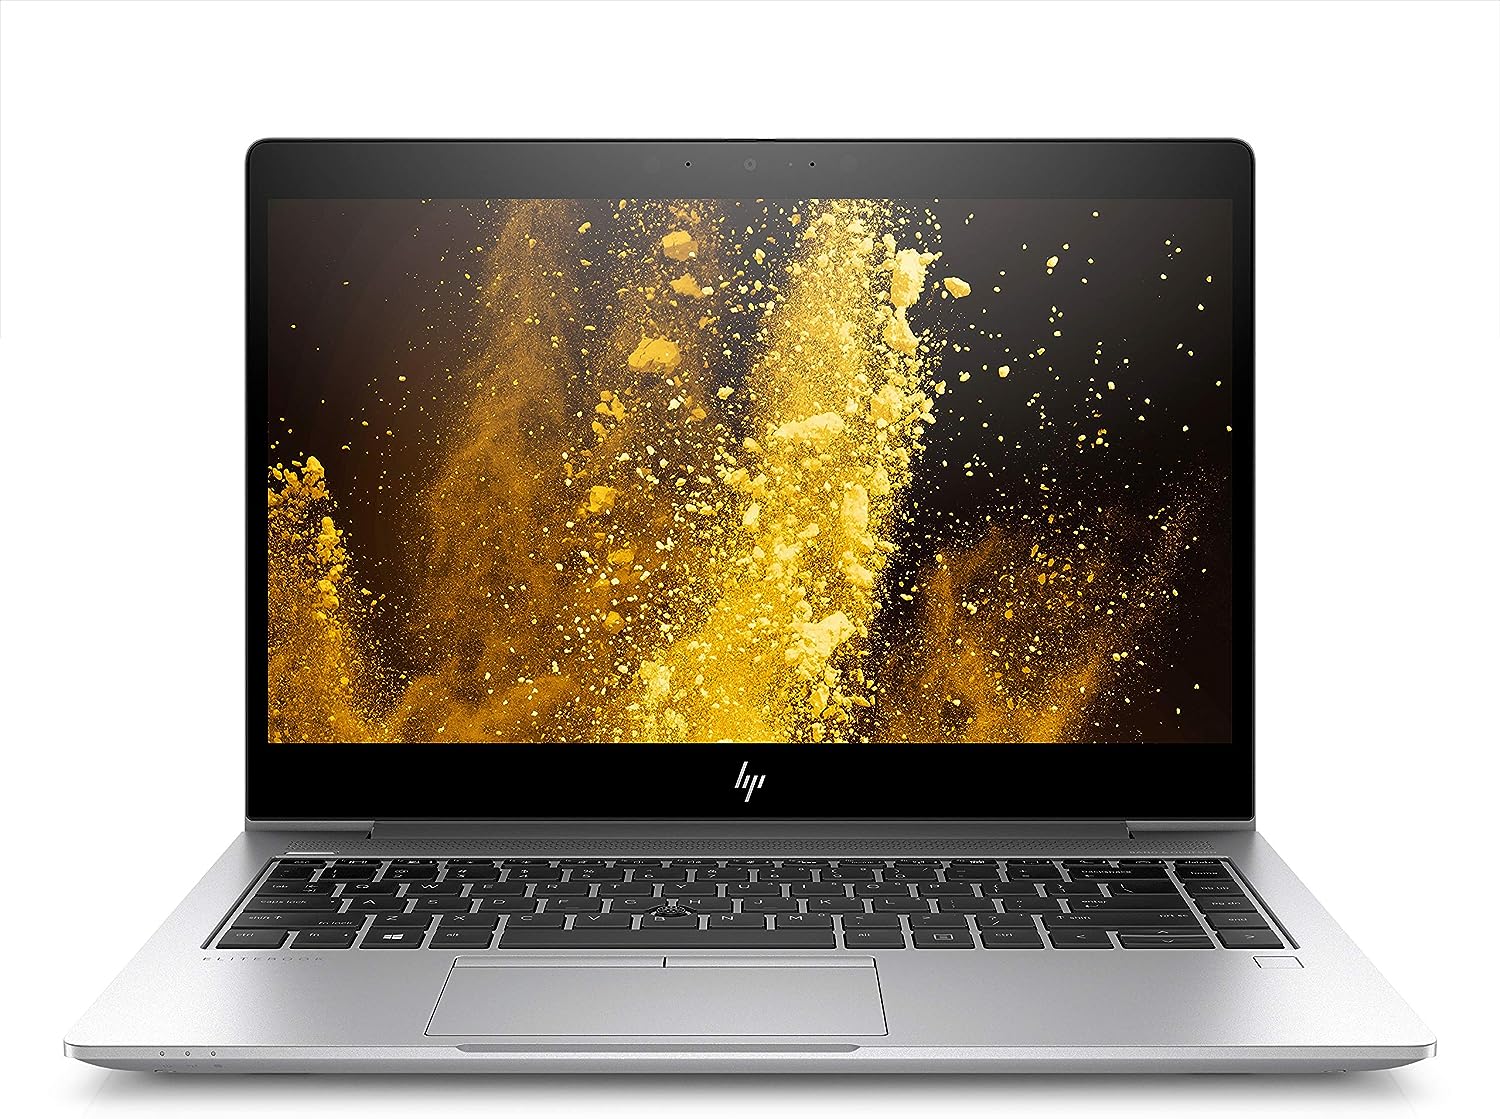 Refurbished HP 840 G6 i7 Laptop